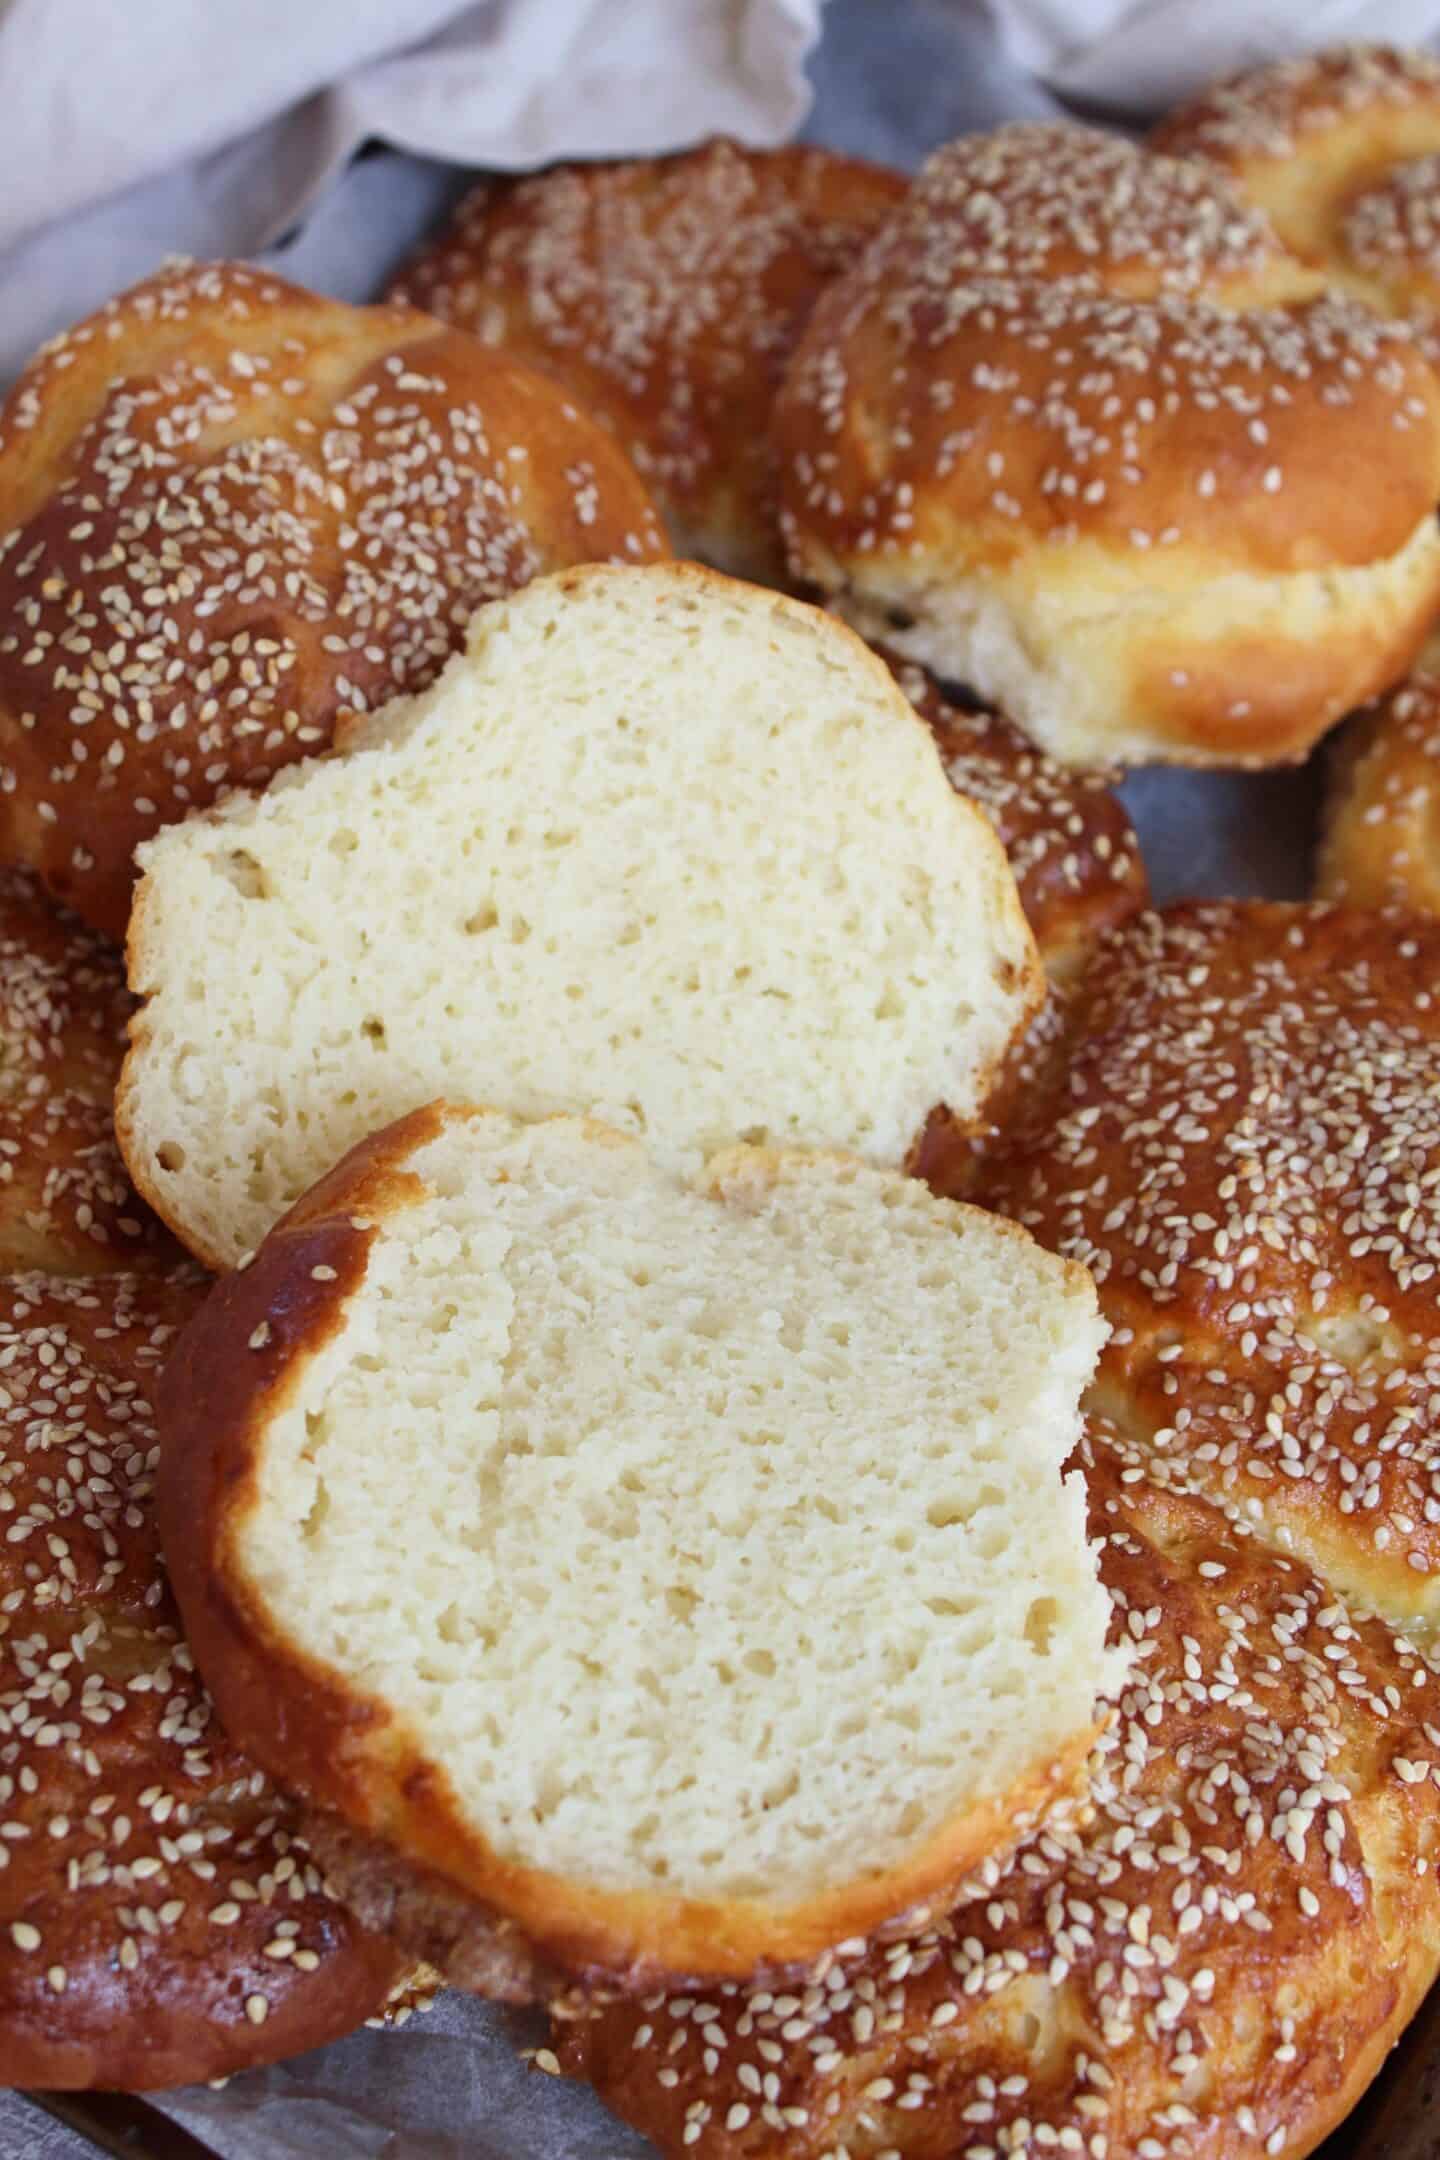 A gluten free brioche bun cut open to show the soft crumb.